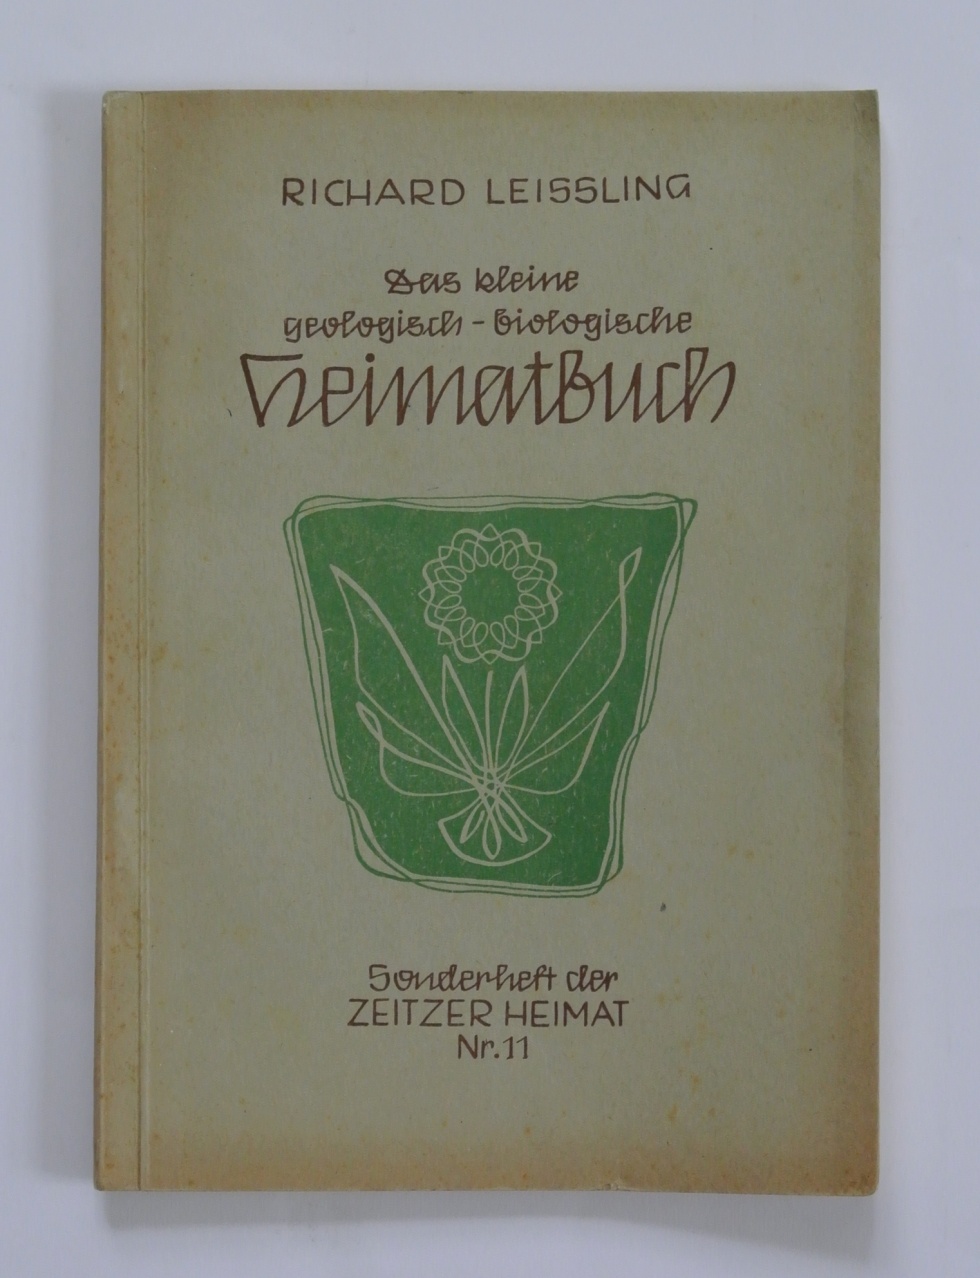 Das kleine geologisch-biologische Heimatbuch (Museum Schloss Moritzburg Zeitz CC BY-NC-SA)